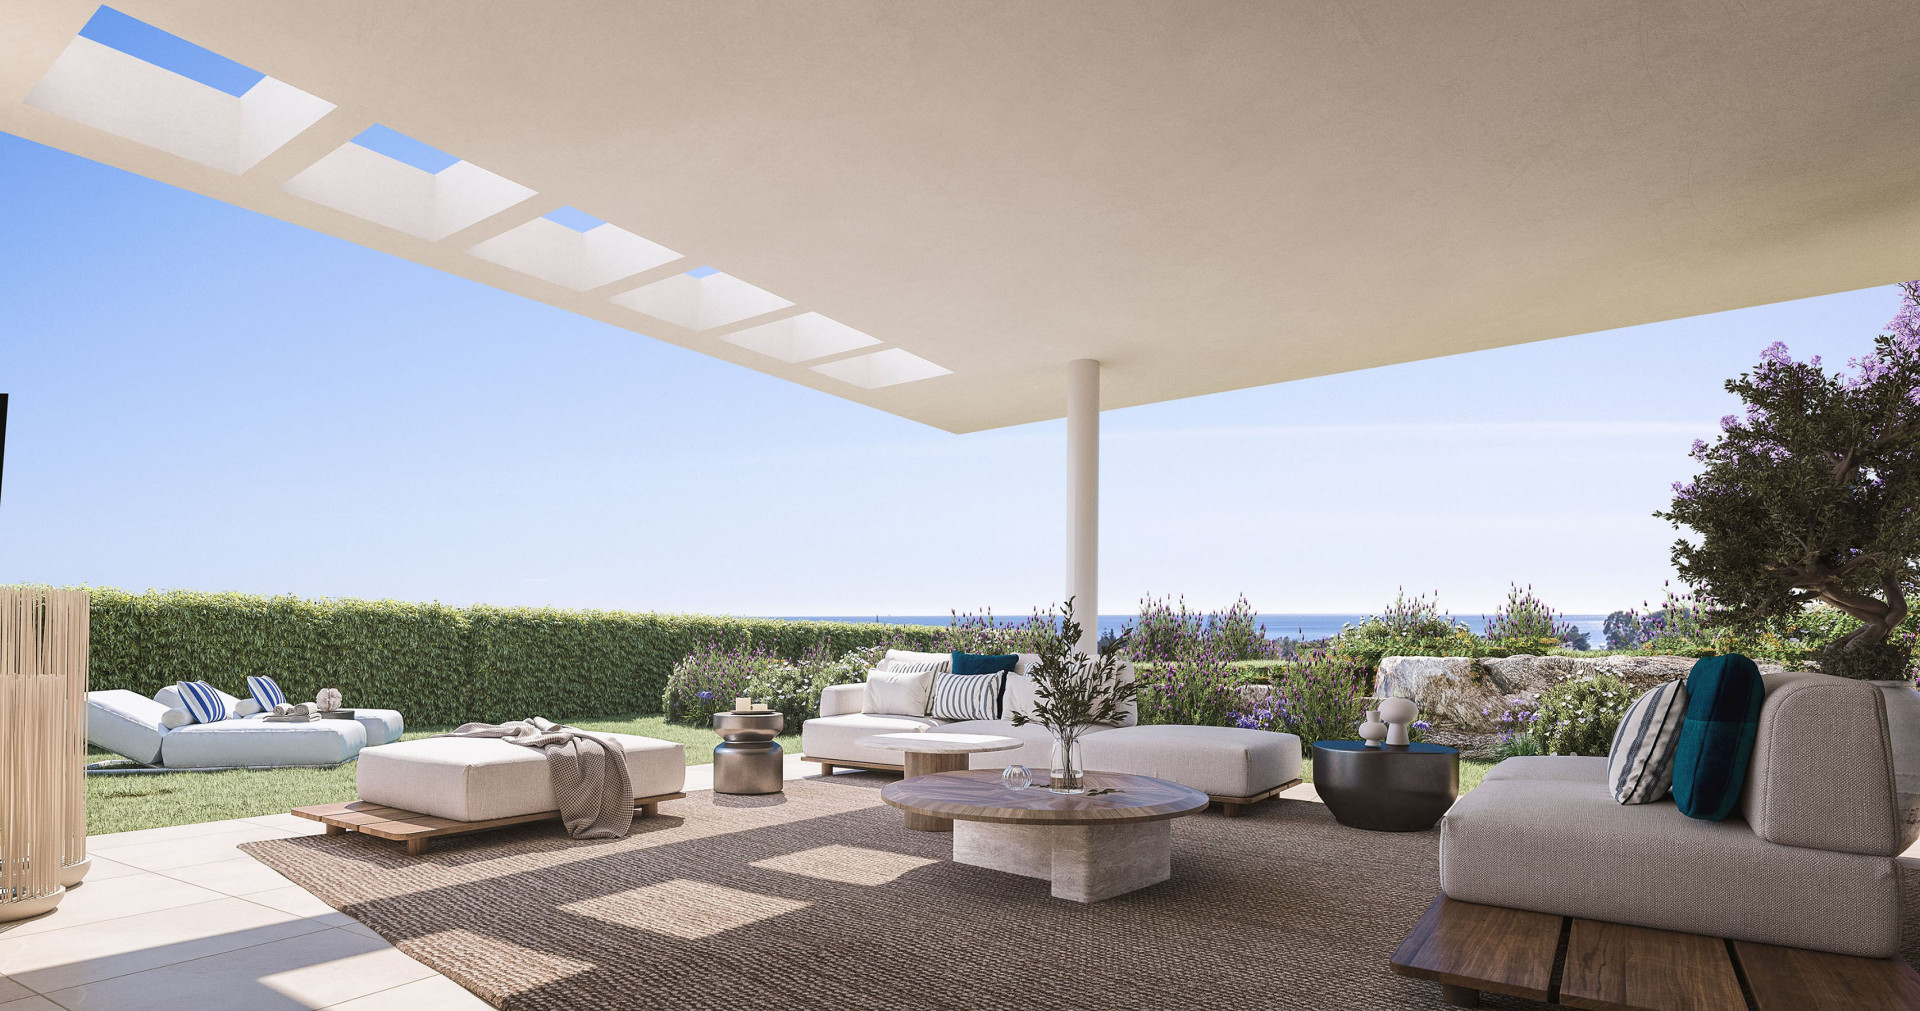 Capri, elegant apartments and penthouses overlooking the Mediterranean sea in Estepona